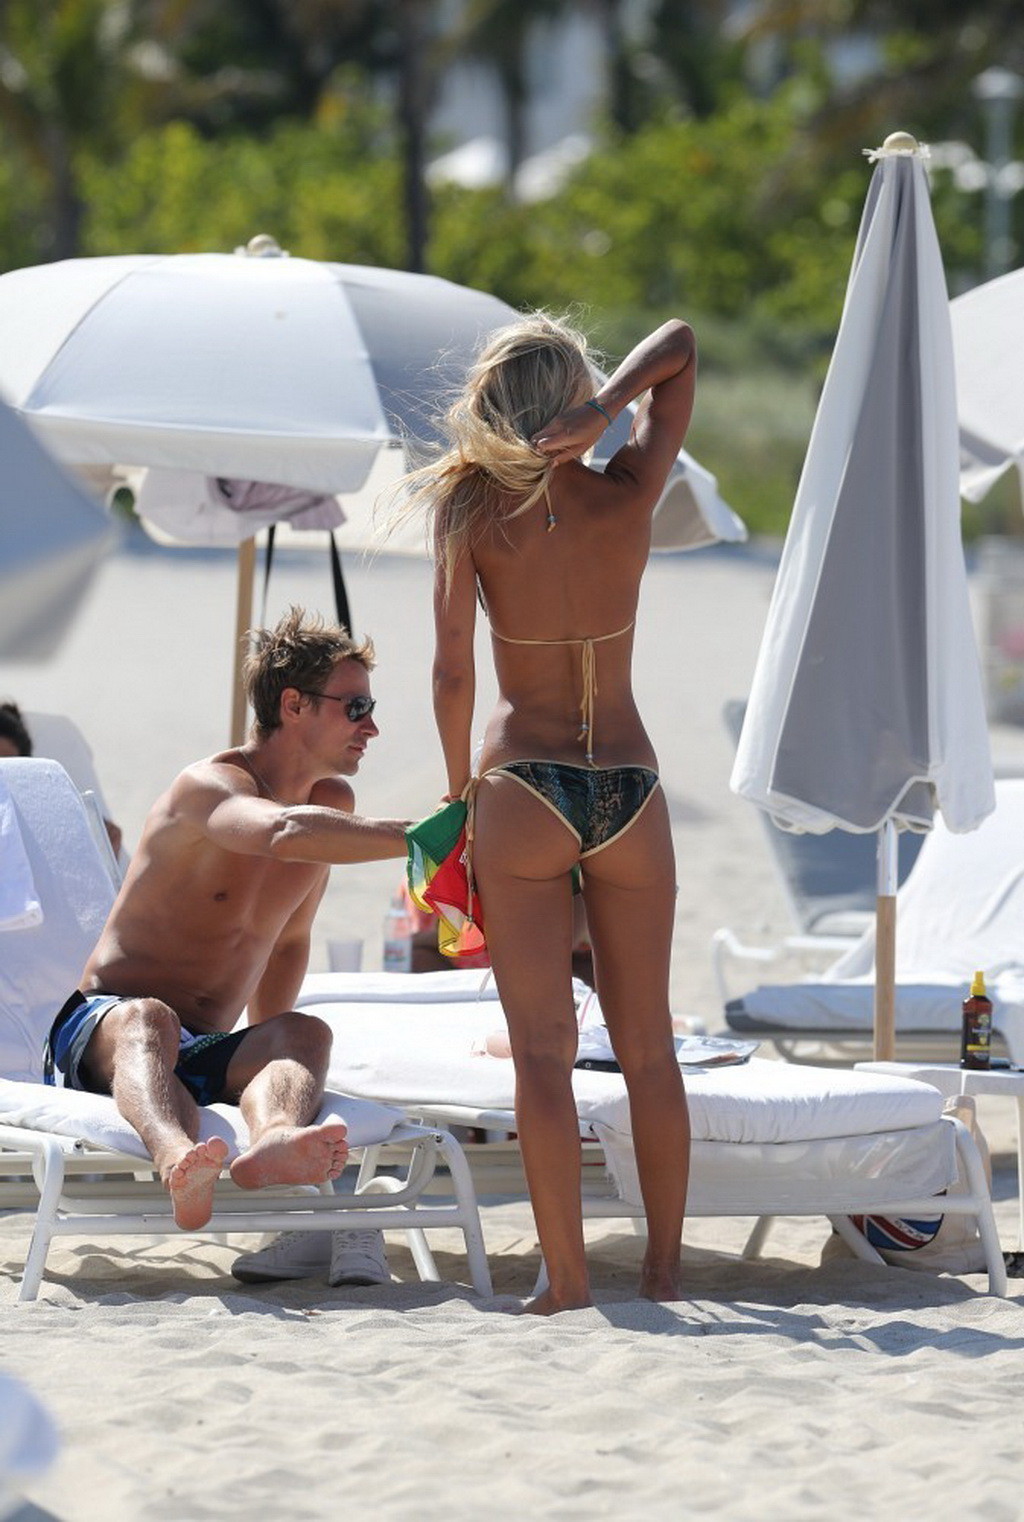 Petra benova zeigt ihren Bikini-Body am Strand in Miami
 #75231973